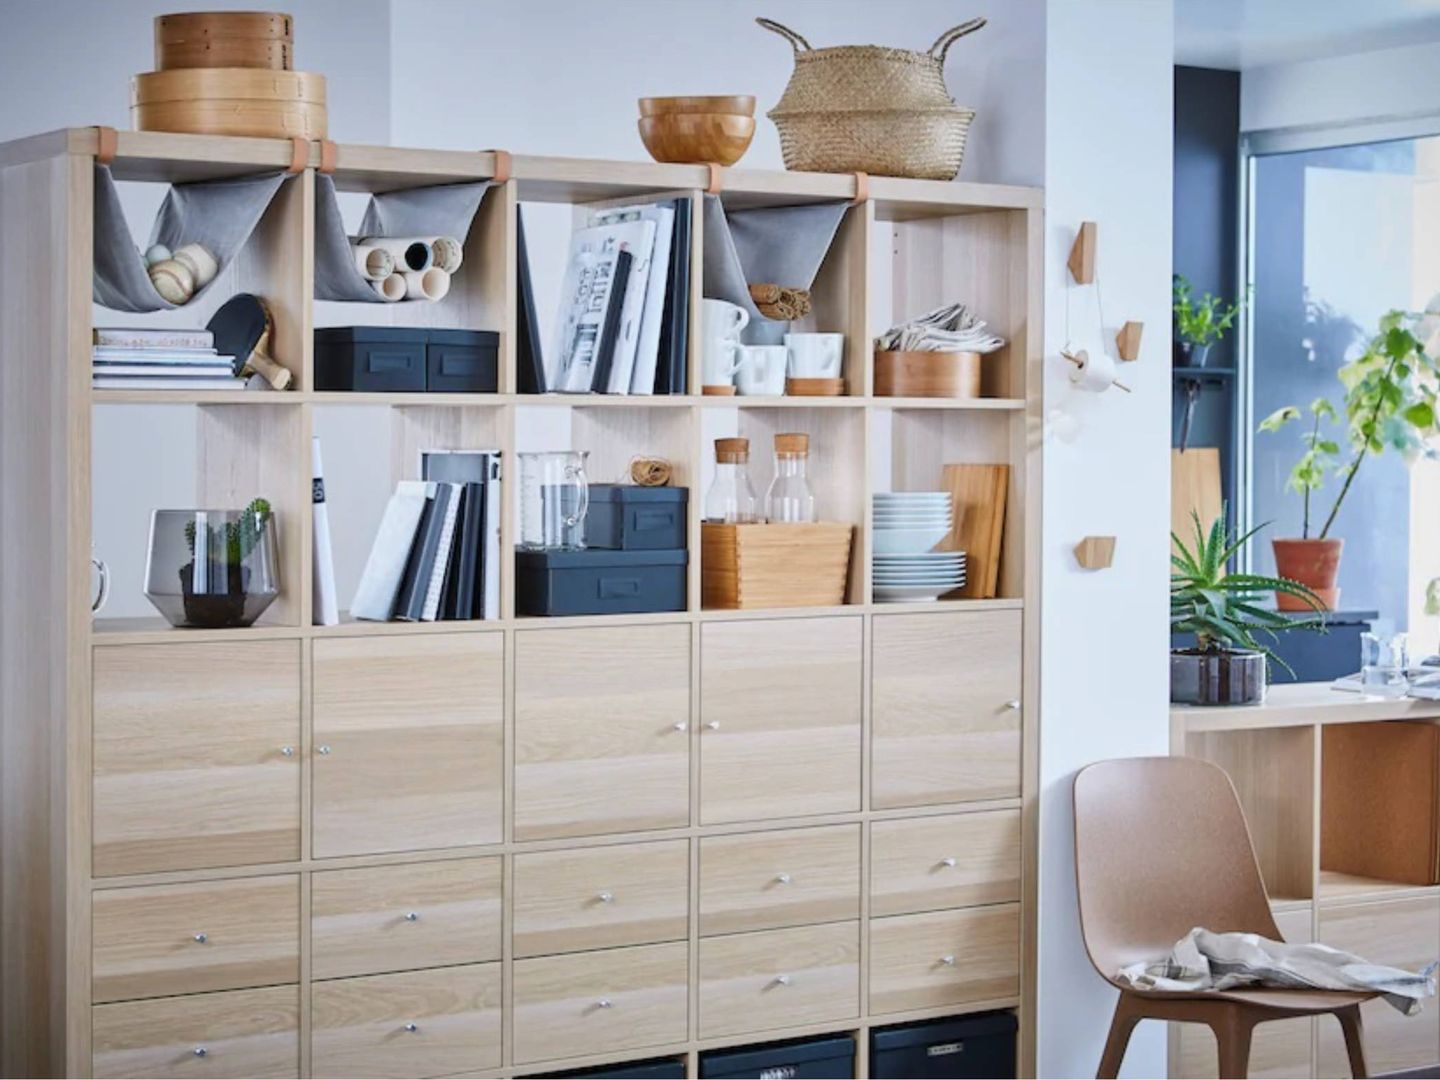 Ikea te enseña a limpiar muebles de madera. (Cortesía)